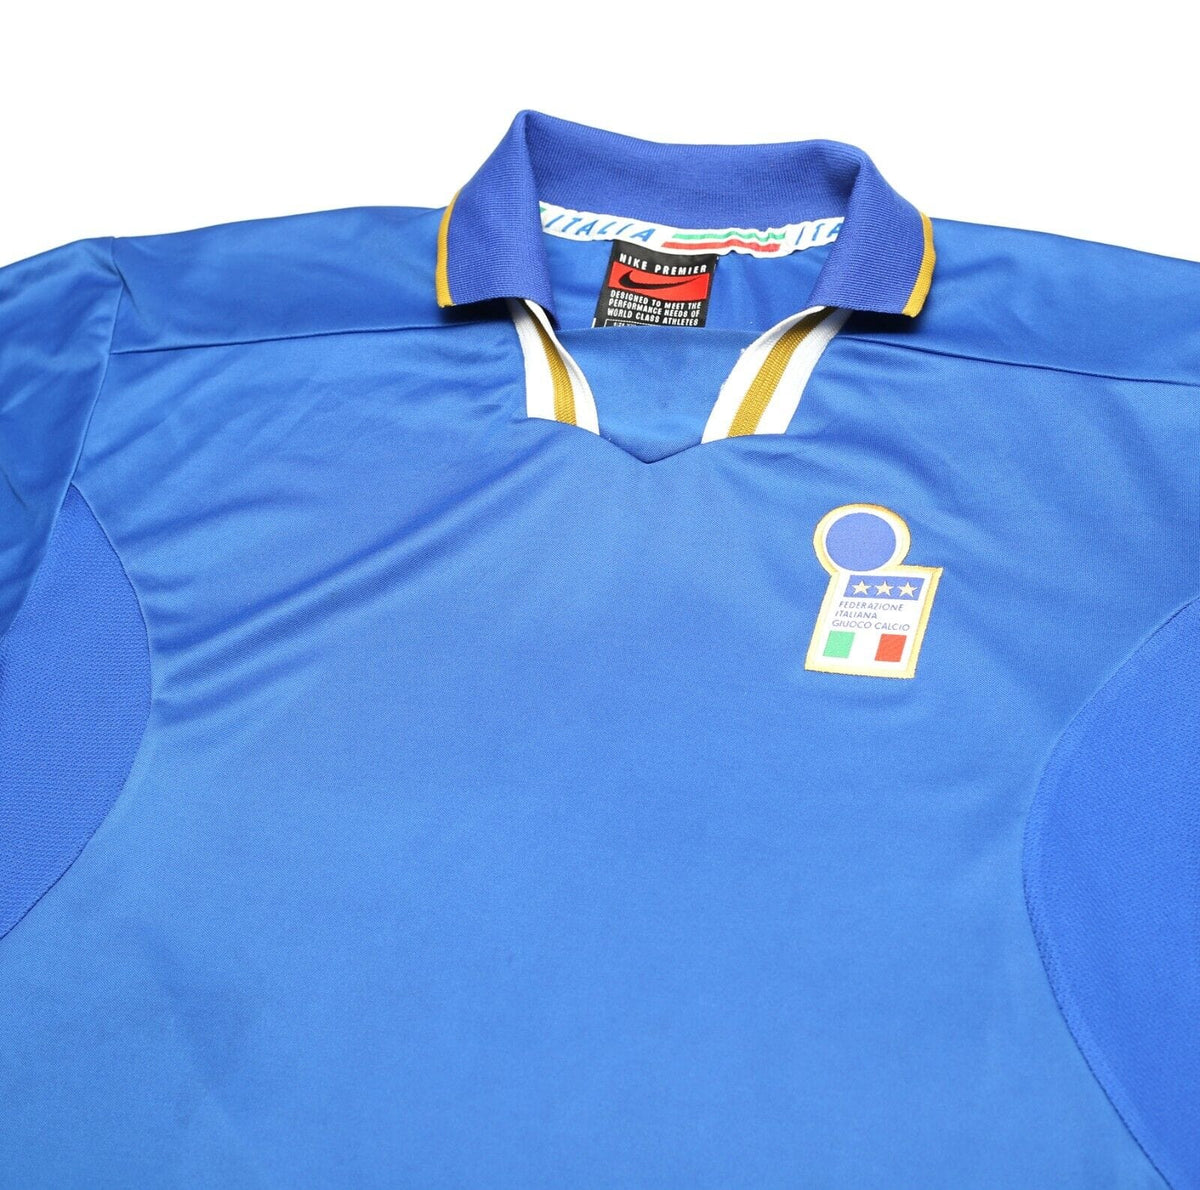 Vintage Italy football shirts - Football Shirt Collective